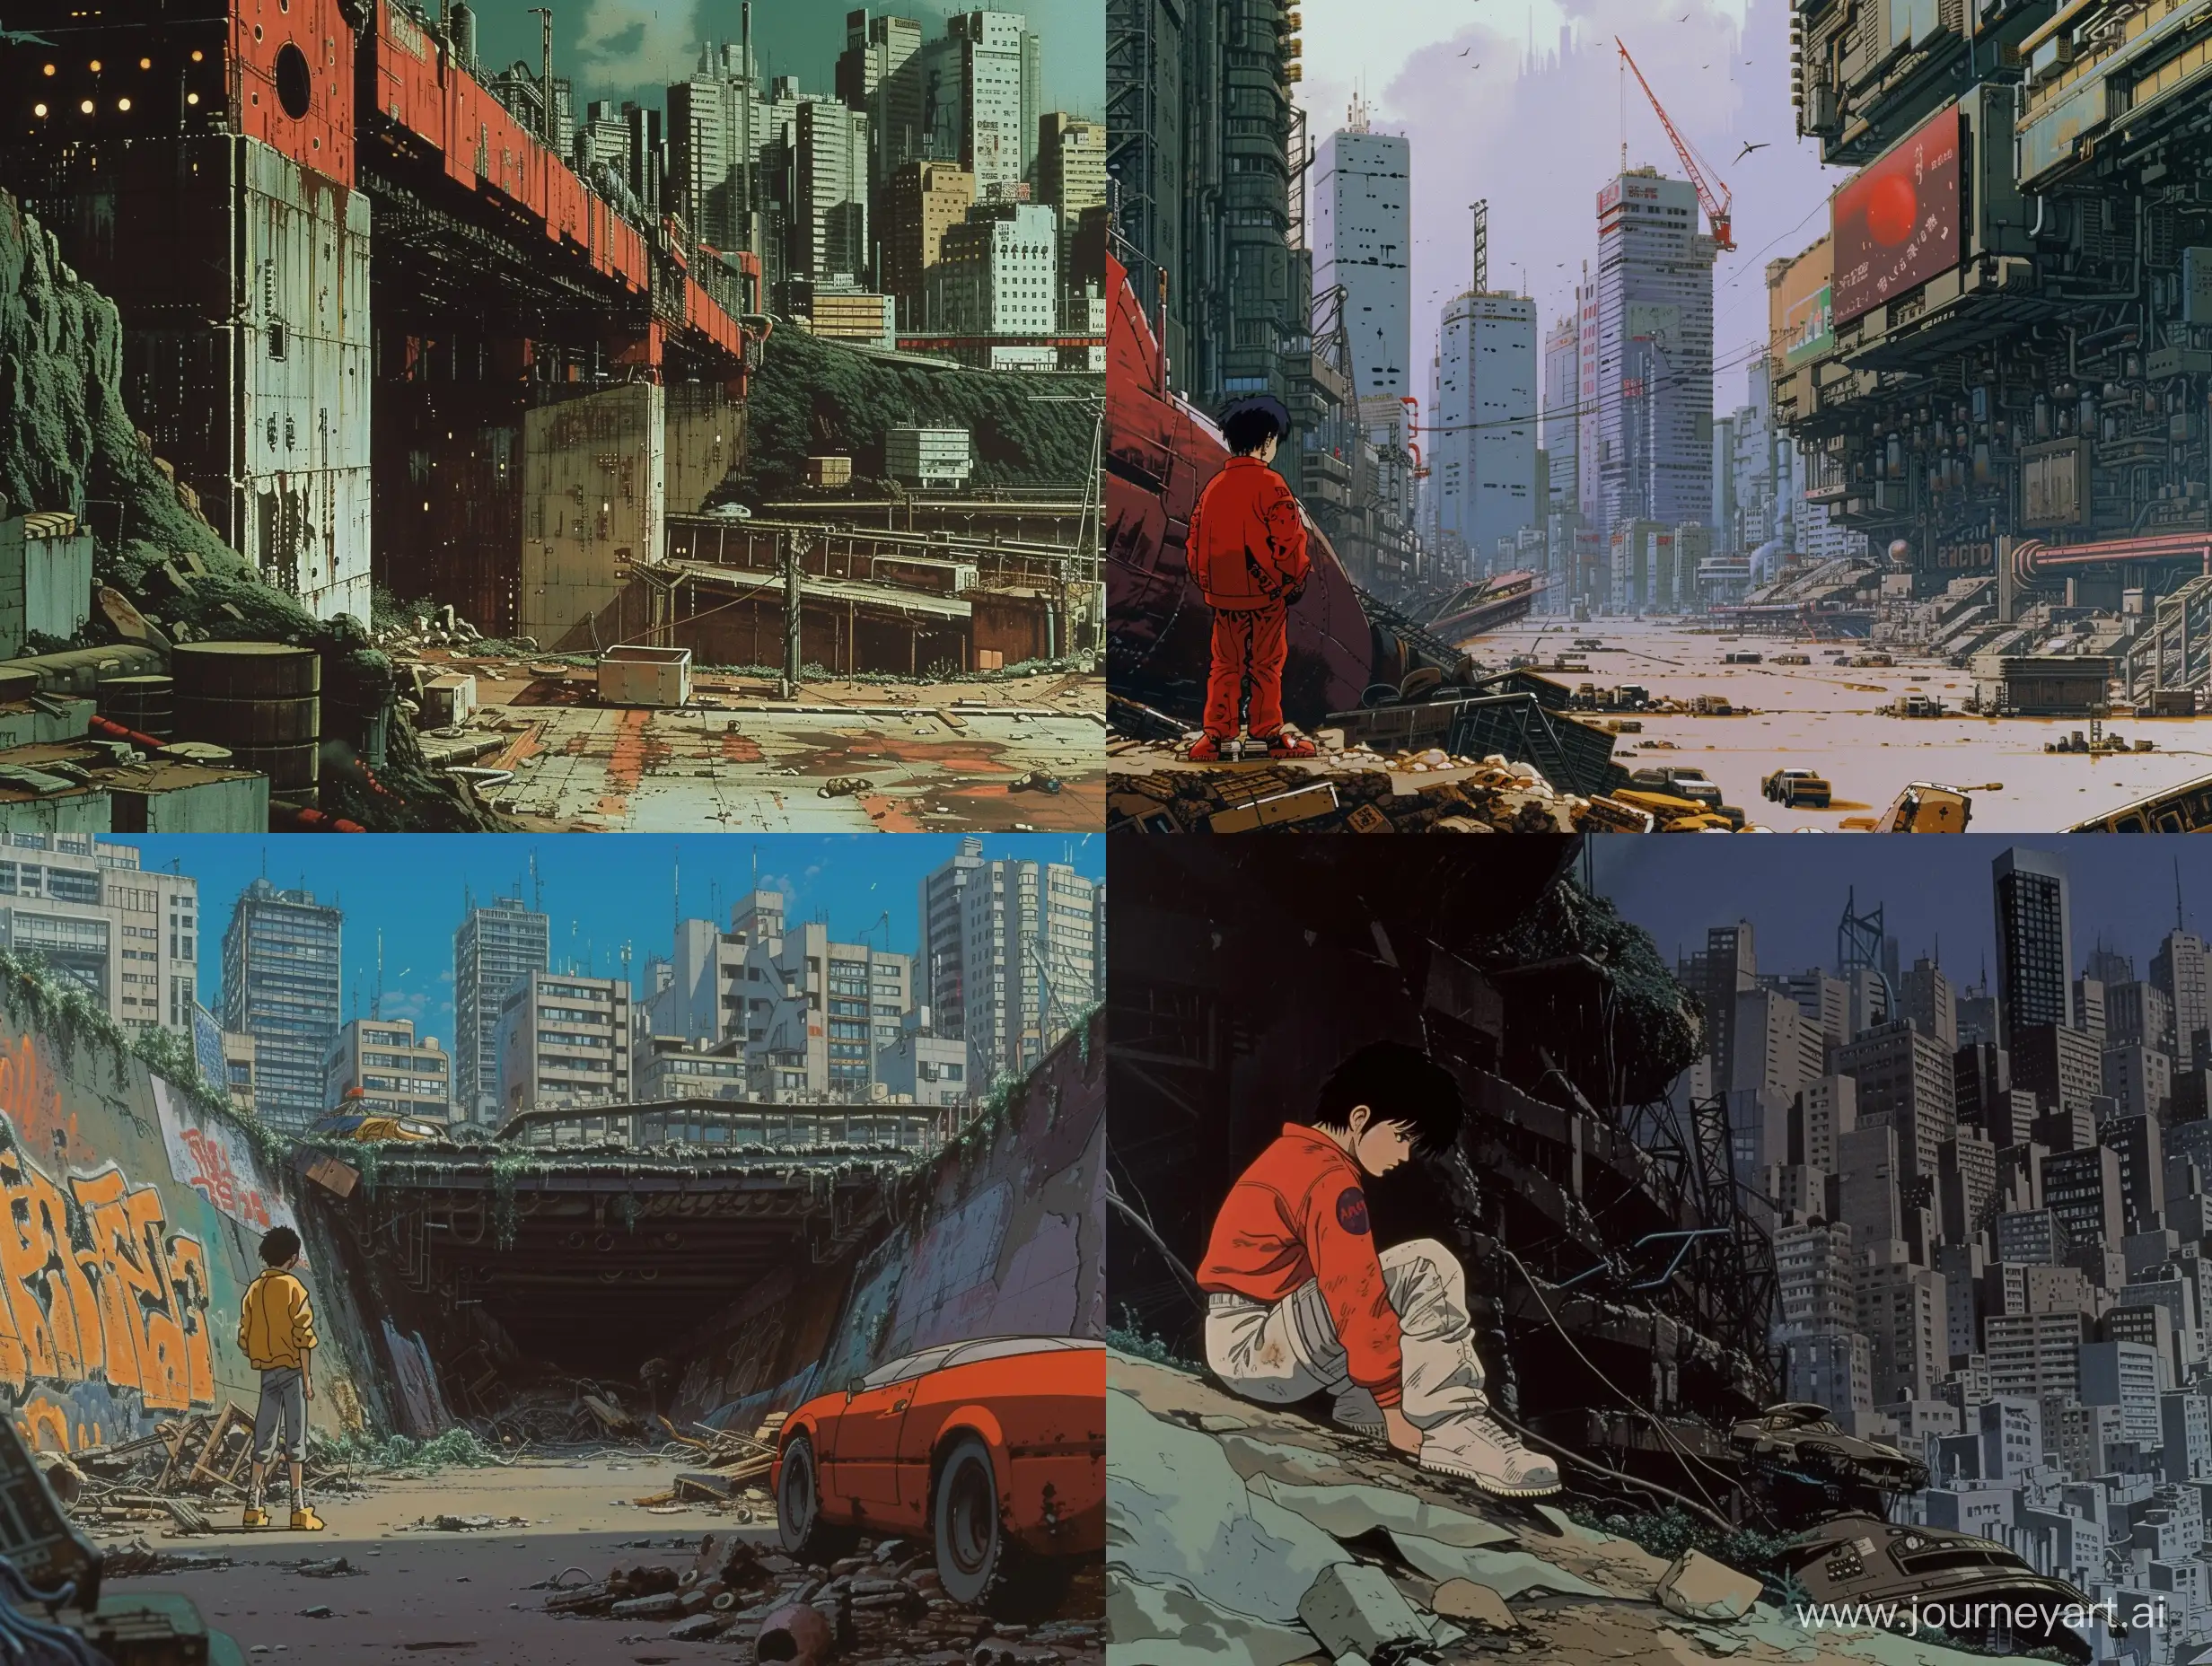 Nostalgic-90s-Anime-Cityscape-AkiraInspired-Dystopian-Environment